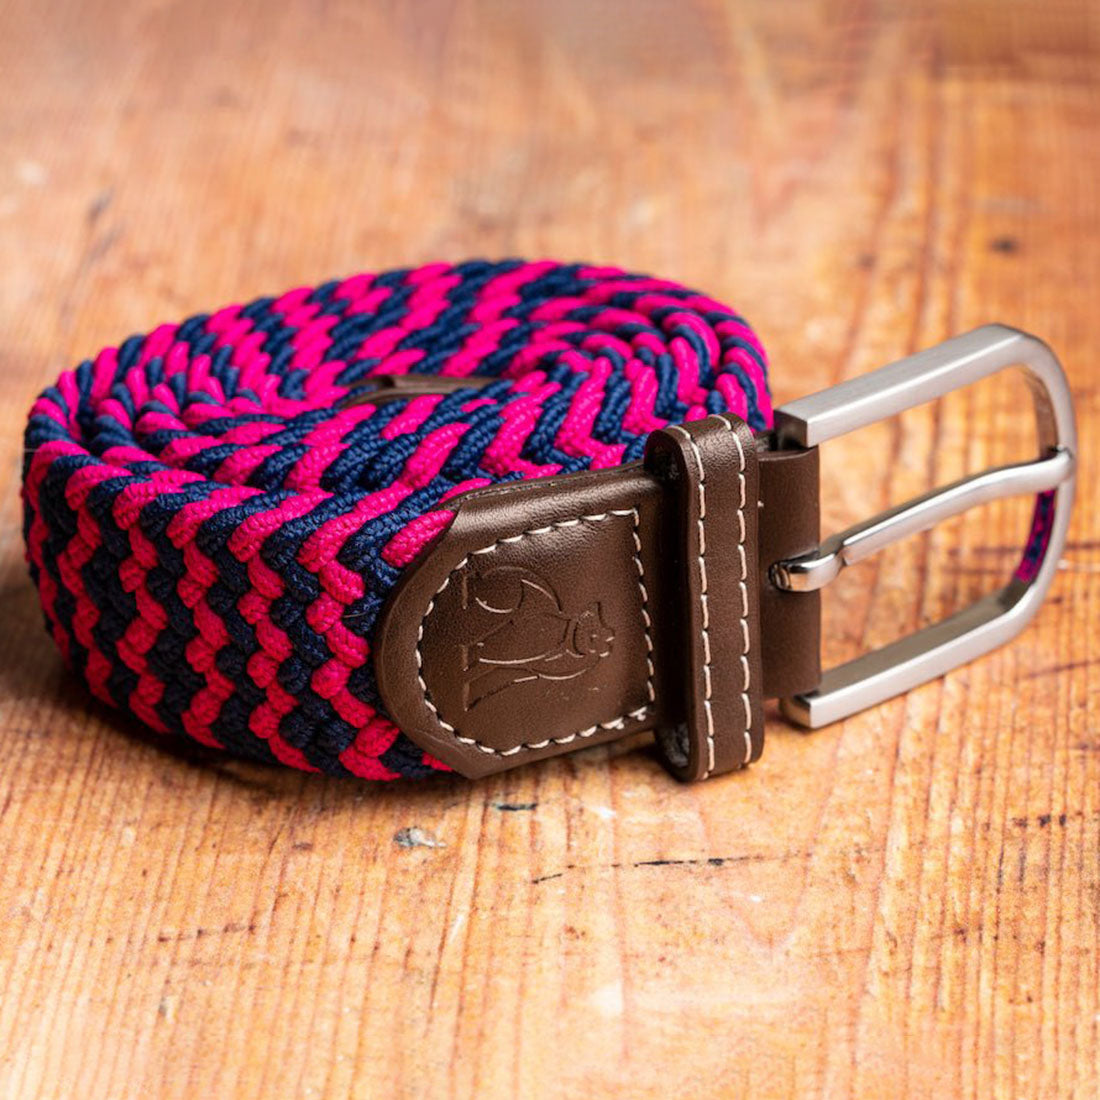 Woven Belt - Pink / Blue Zigzag